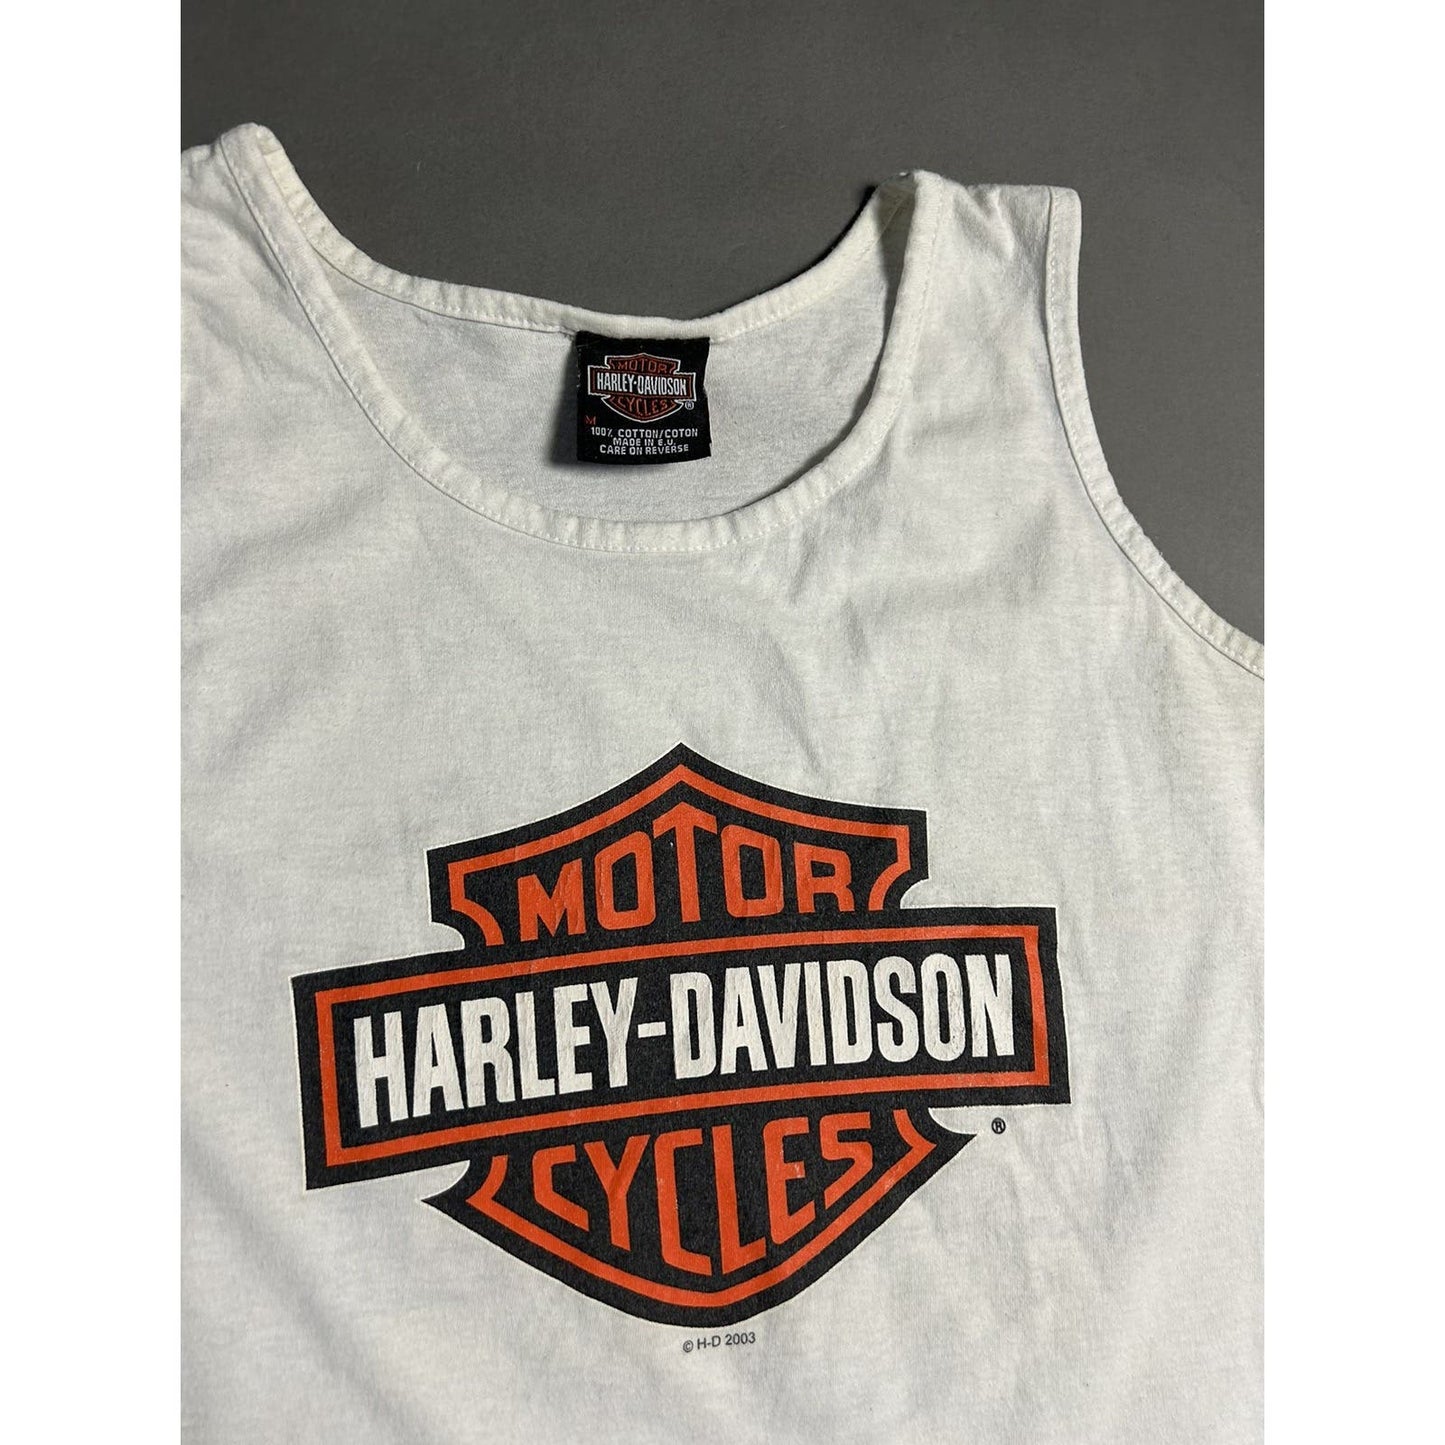 Harley Davidson vintage tank top big logo